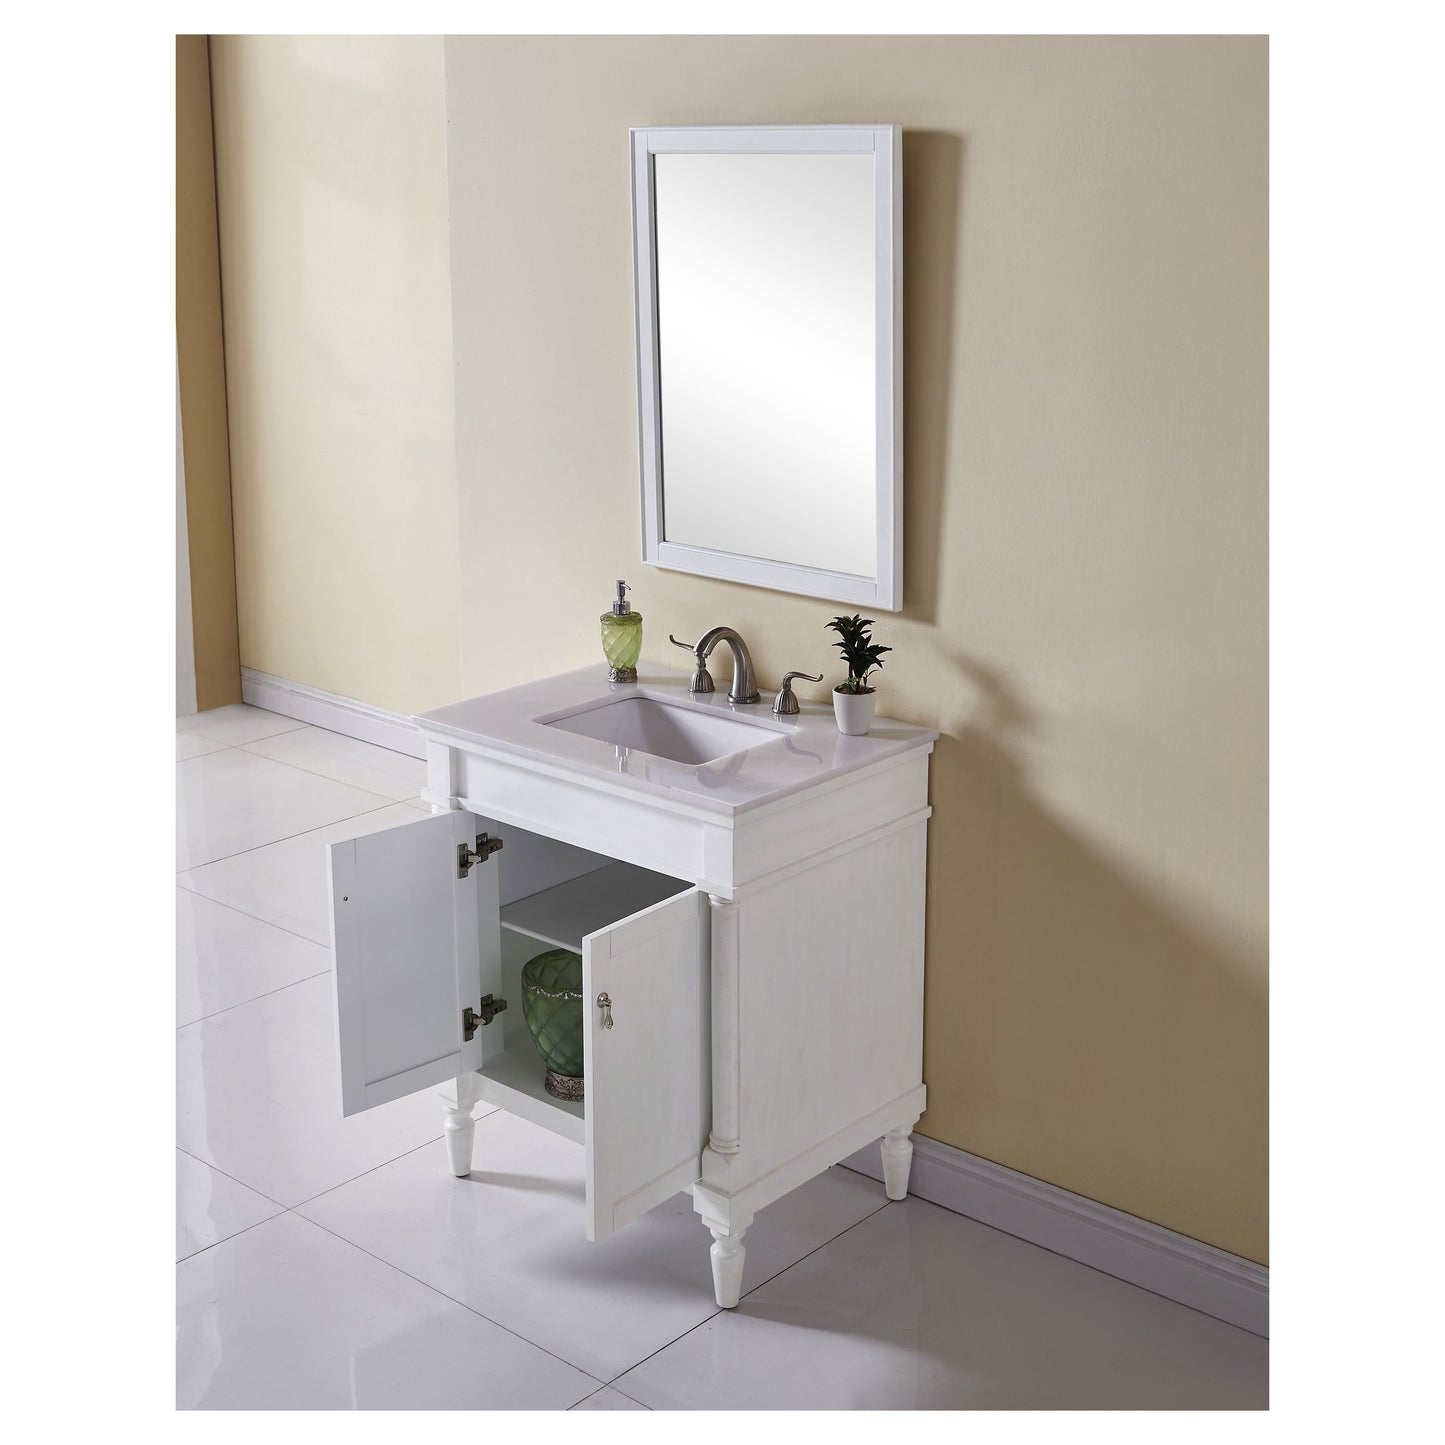 VF13030AW 30" Single Bathroom Vanity Set in Antique White